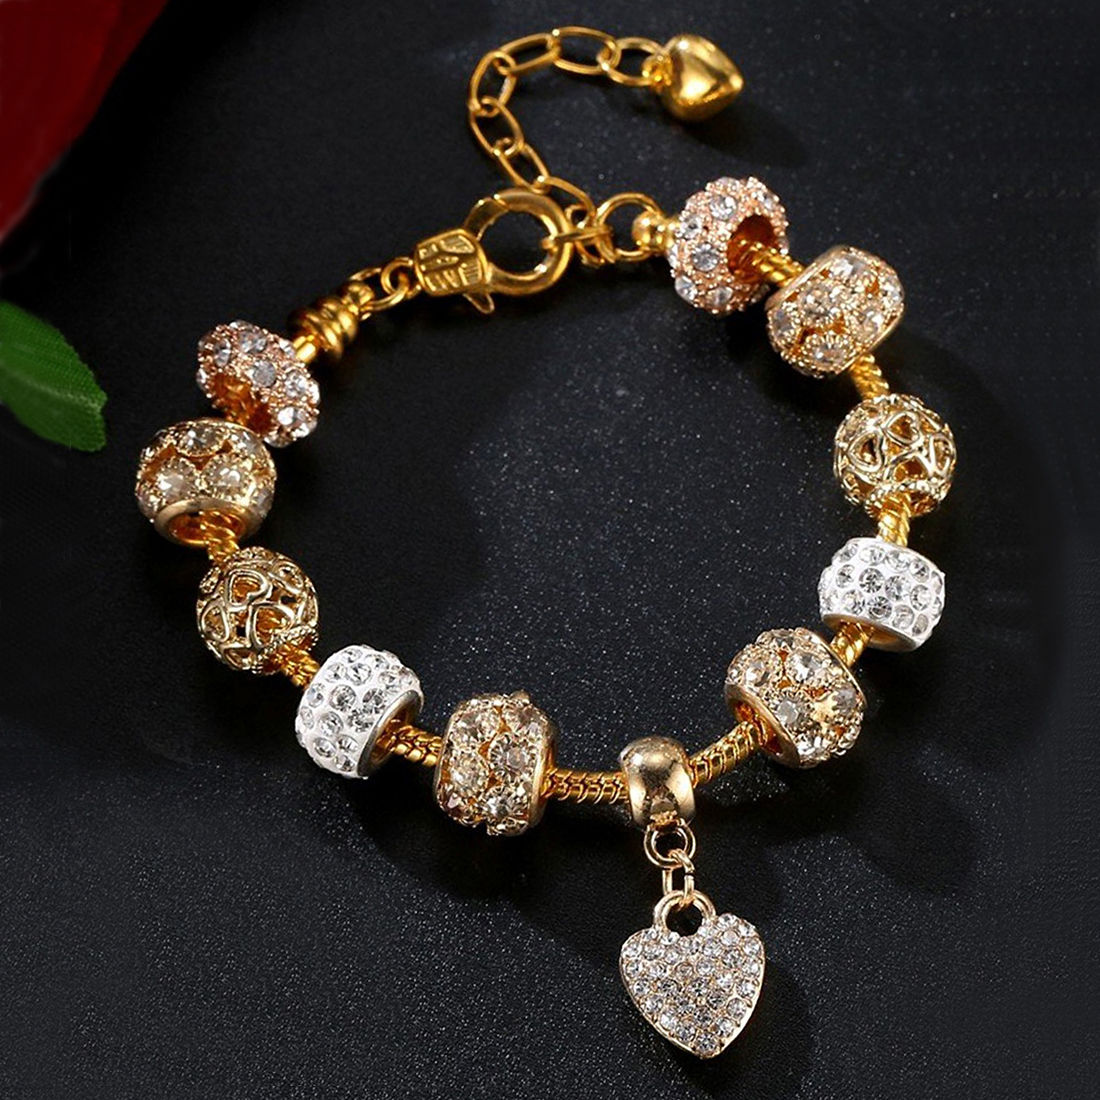 Discover 74+ charm bracelet online india best